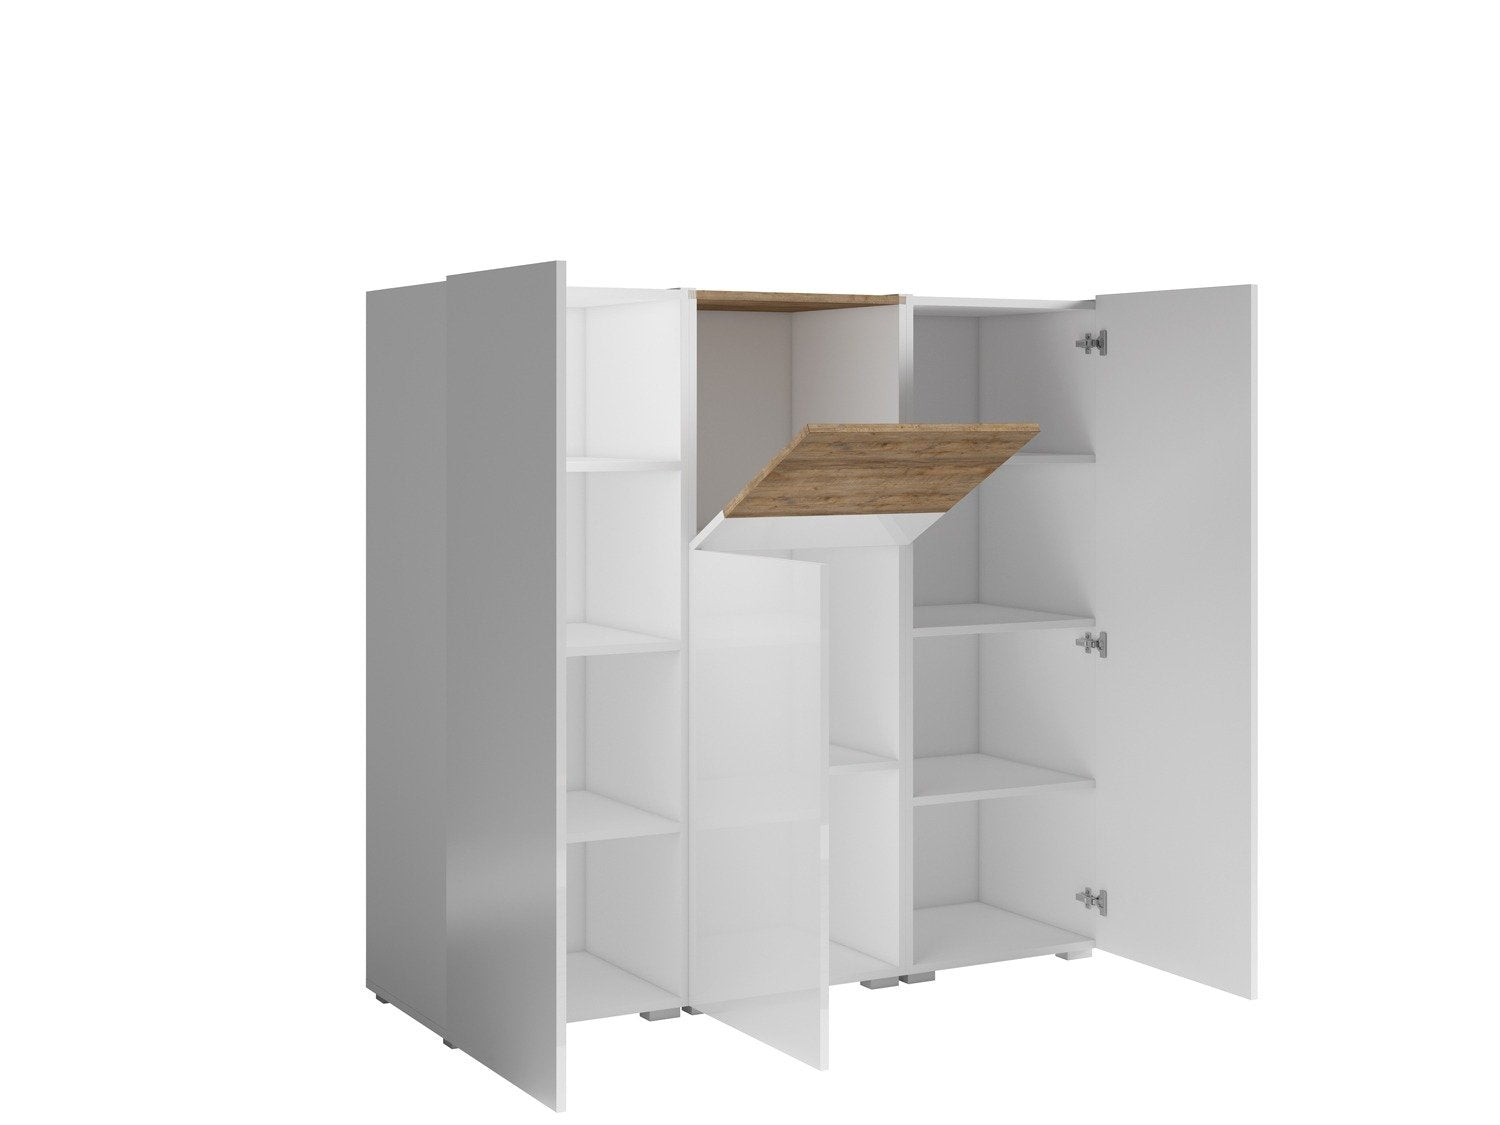 Power 46 Large Sideboard Cabinet-Living Sideboard Cabinet